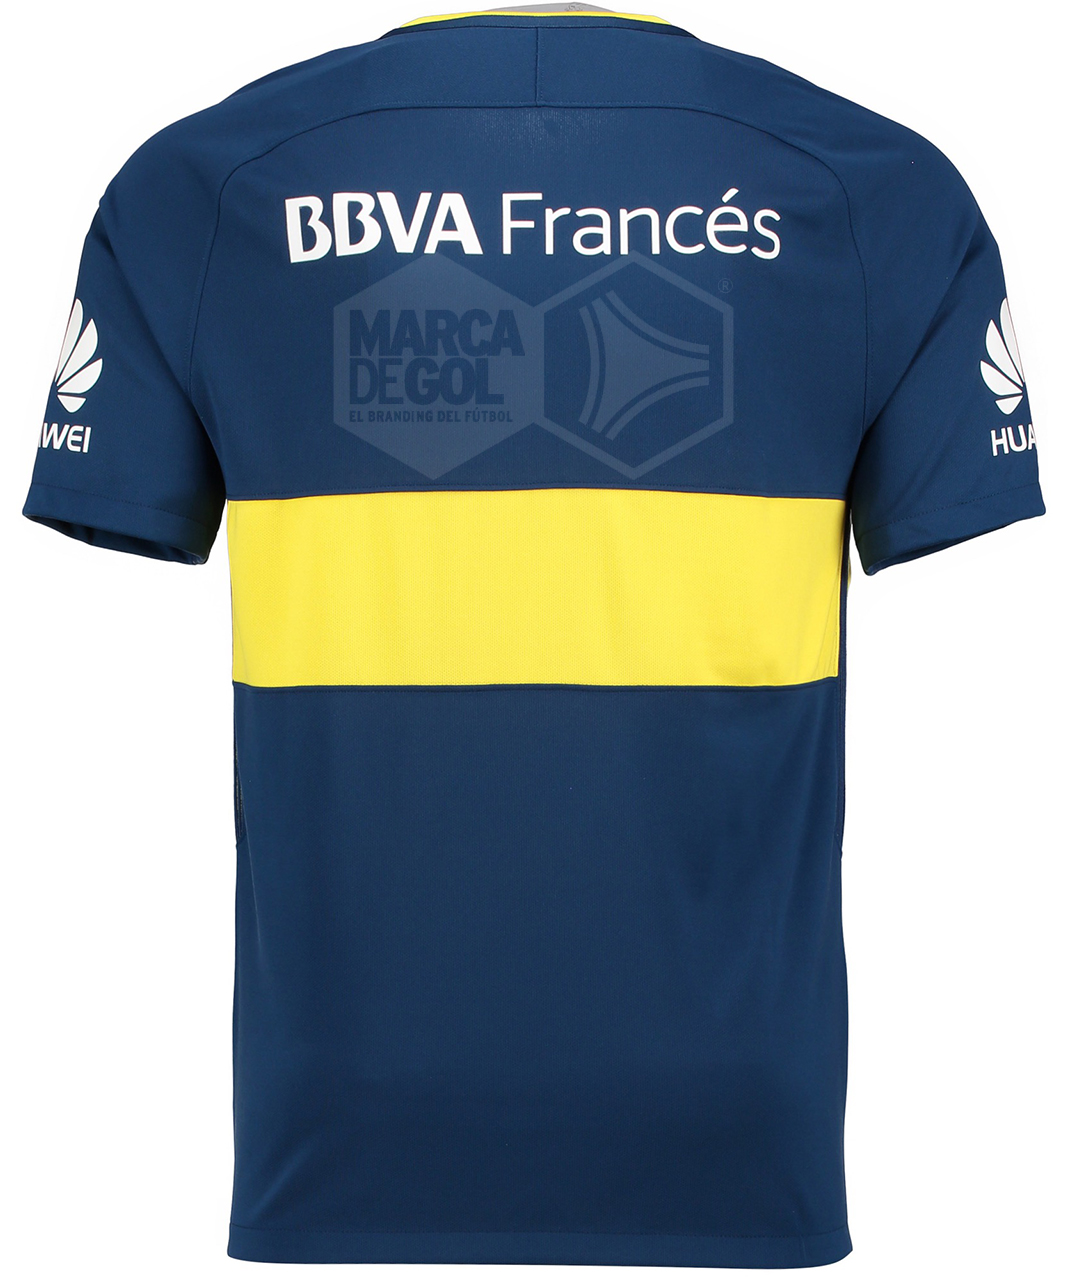 Camiseta titular Nike de Boca Juniors 2017 18